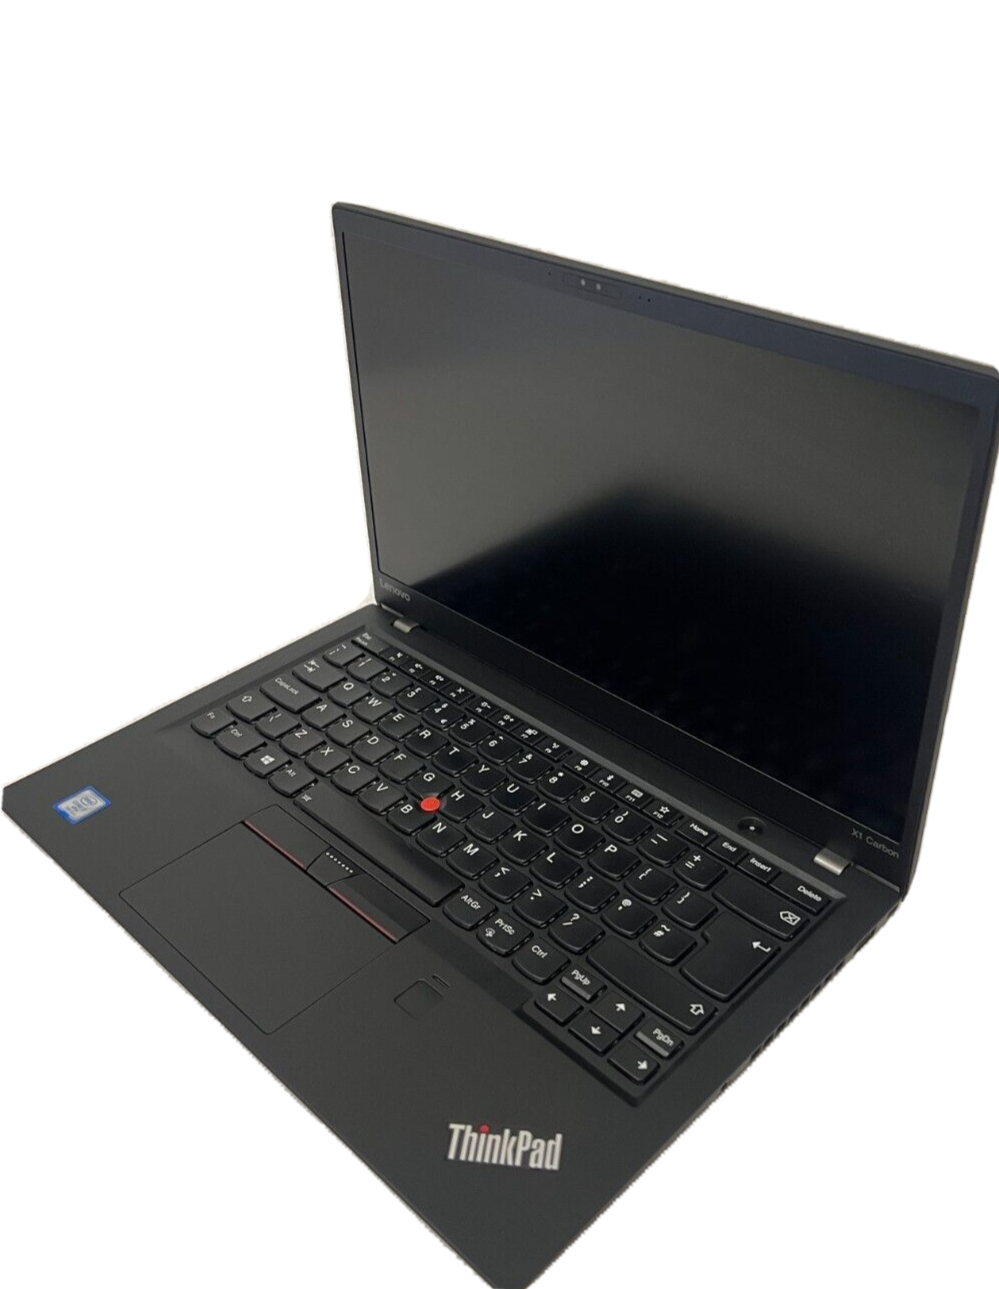 Lenovo Thinkpad X1 Carbon laptop i7-7600U 5thGEN Turbo 3.9GHz 16GB 256GB SSD 14"